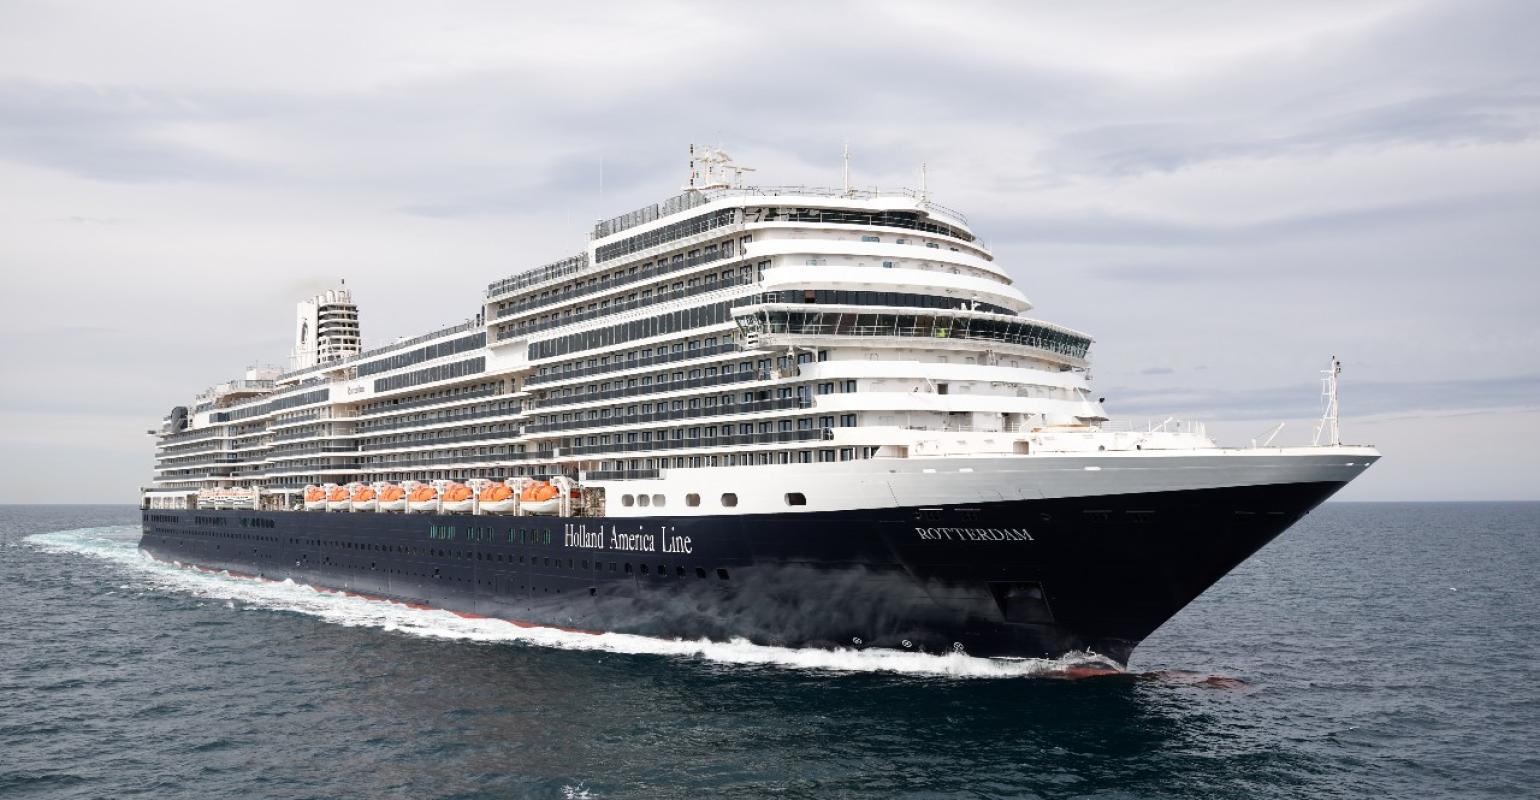 Holland America Line's Rotterdam inaugural Caribbean cruise seatrade